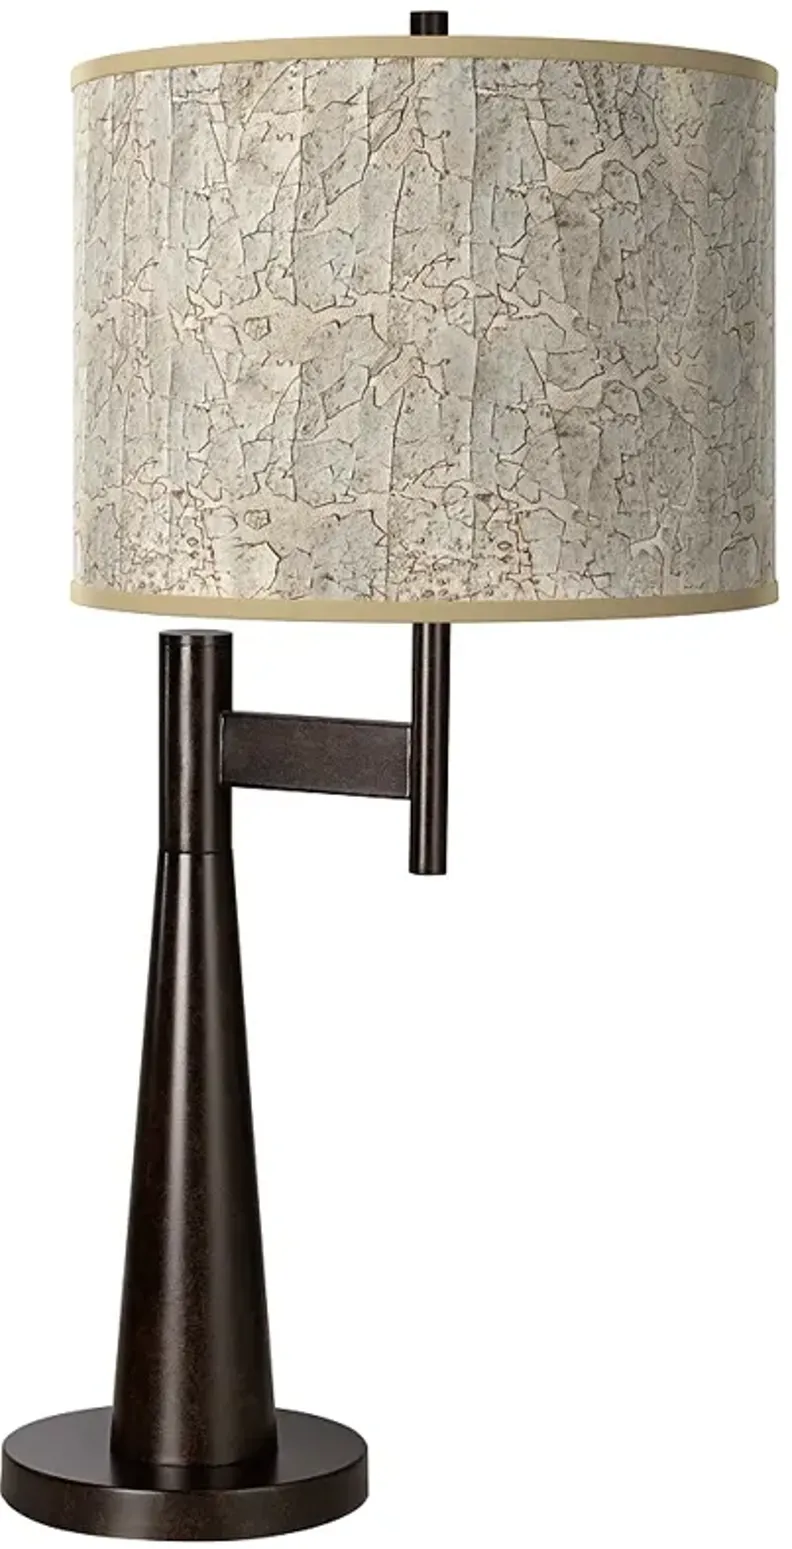 Al Fresco Giclee Novo Table Lamp